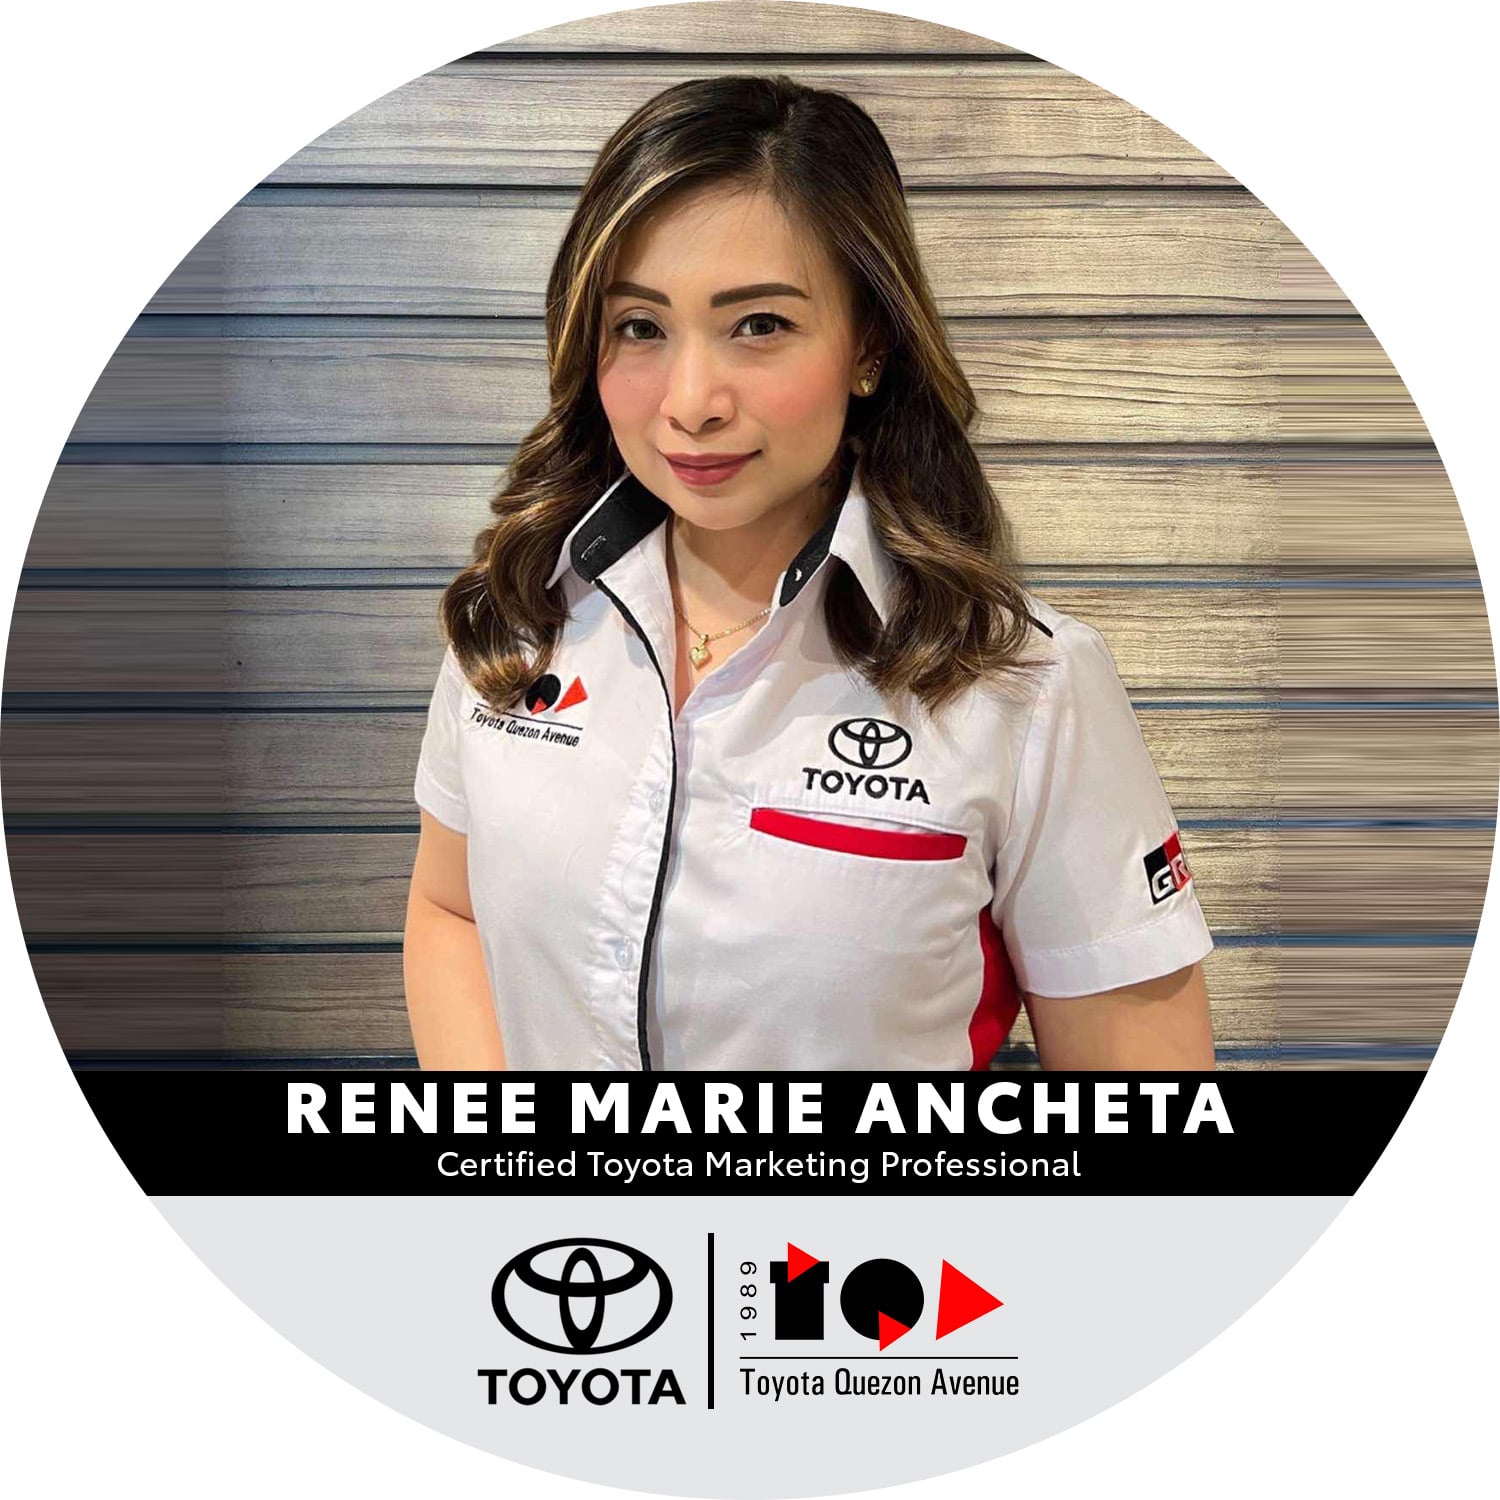 Certified Toyota Marketing Professionals - Renee Marie Ancheta